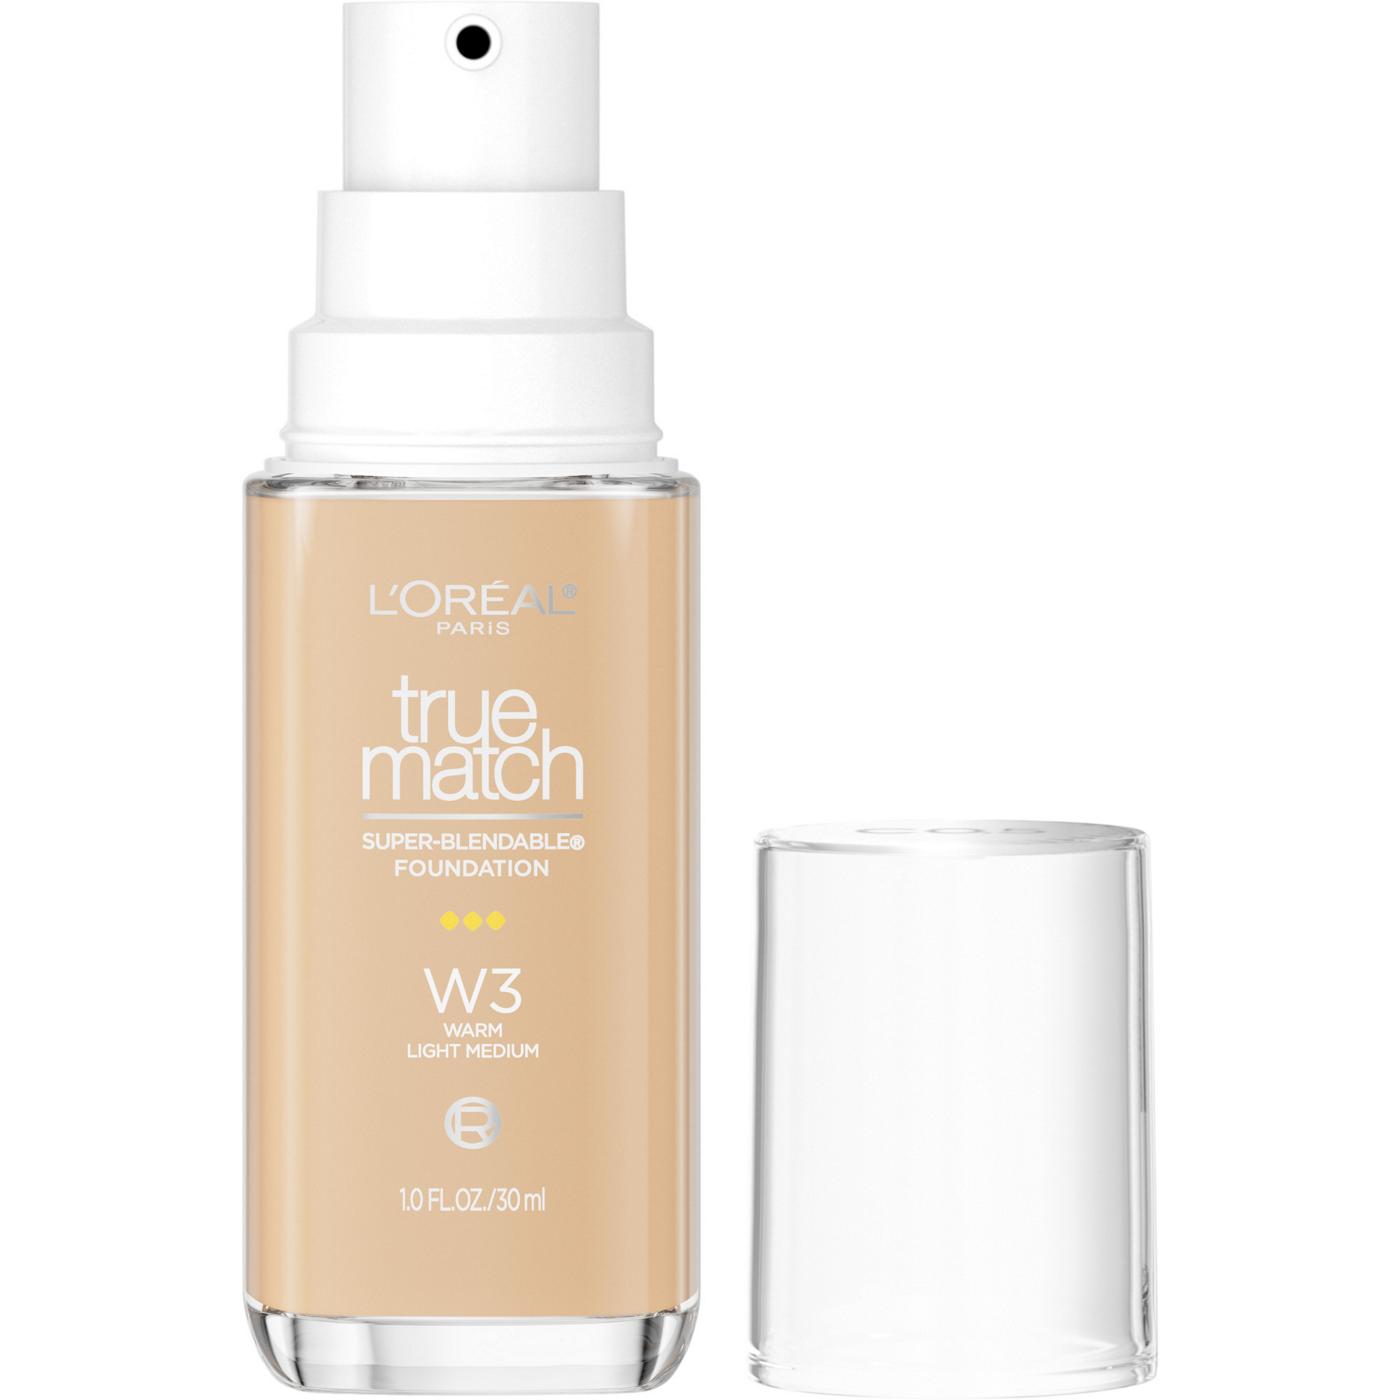 L'Oréal Paris True Match Super-Blendable Liquid Foundation - Light Medium W3; image 1 of 8